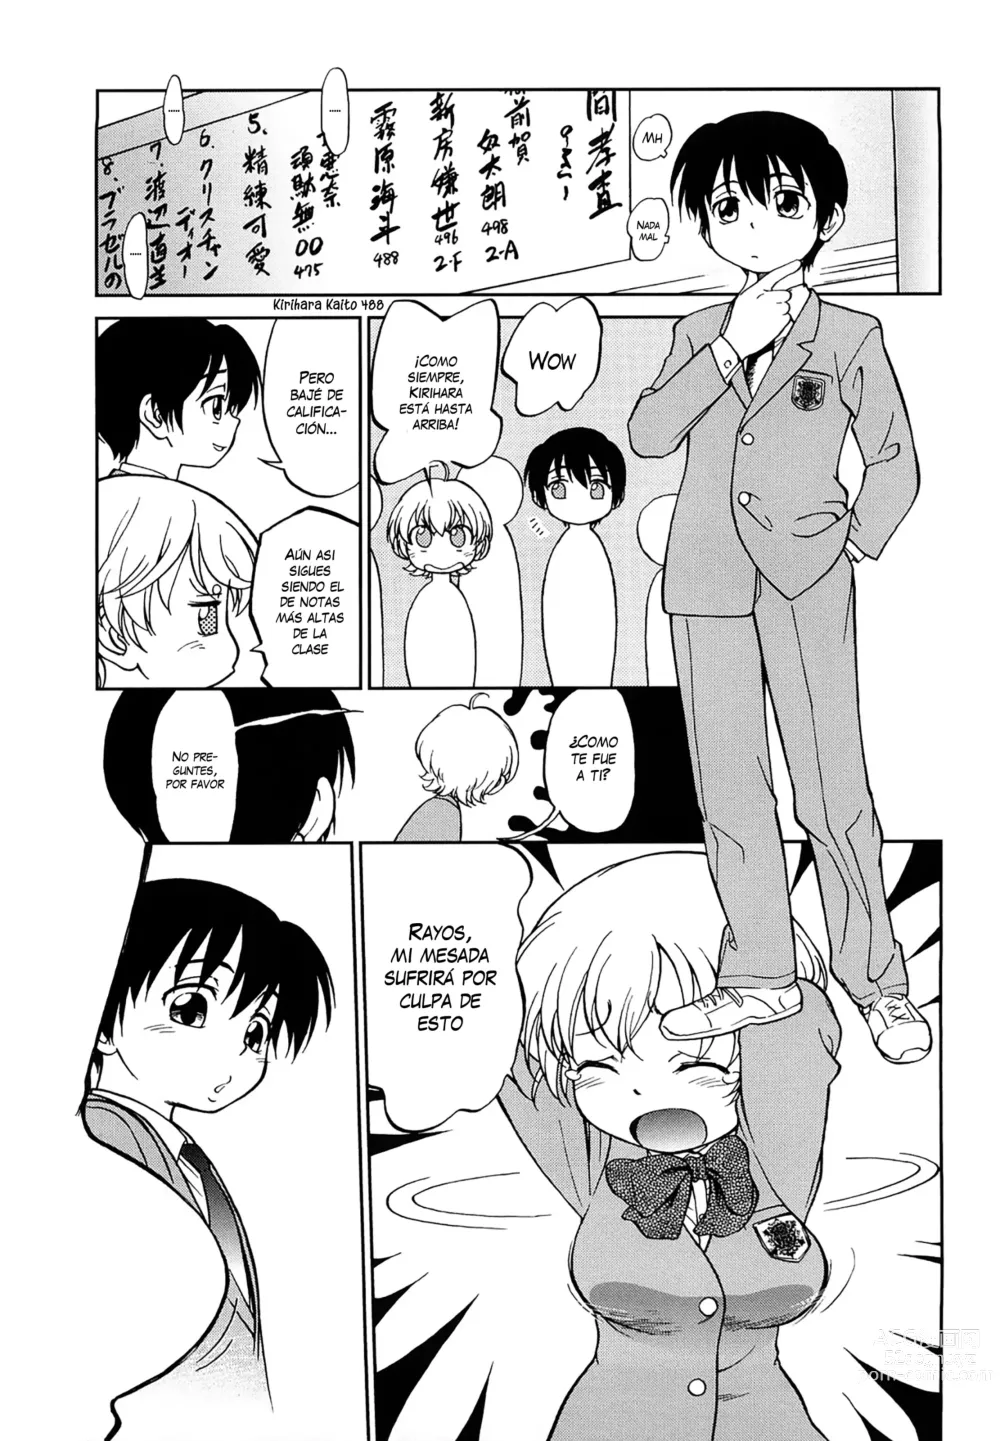 Page 27 of manga Teach me, Kirihara-kun